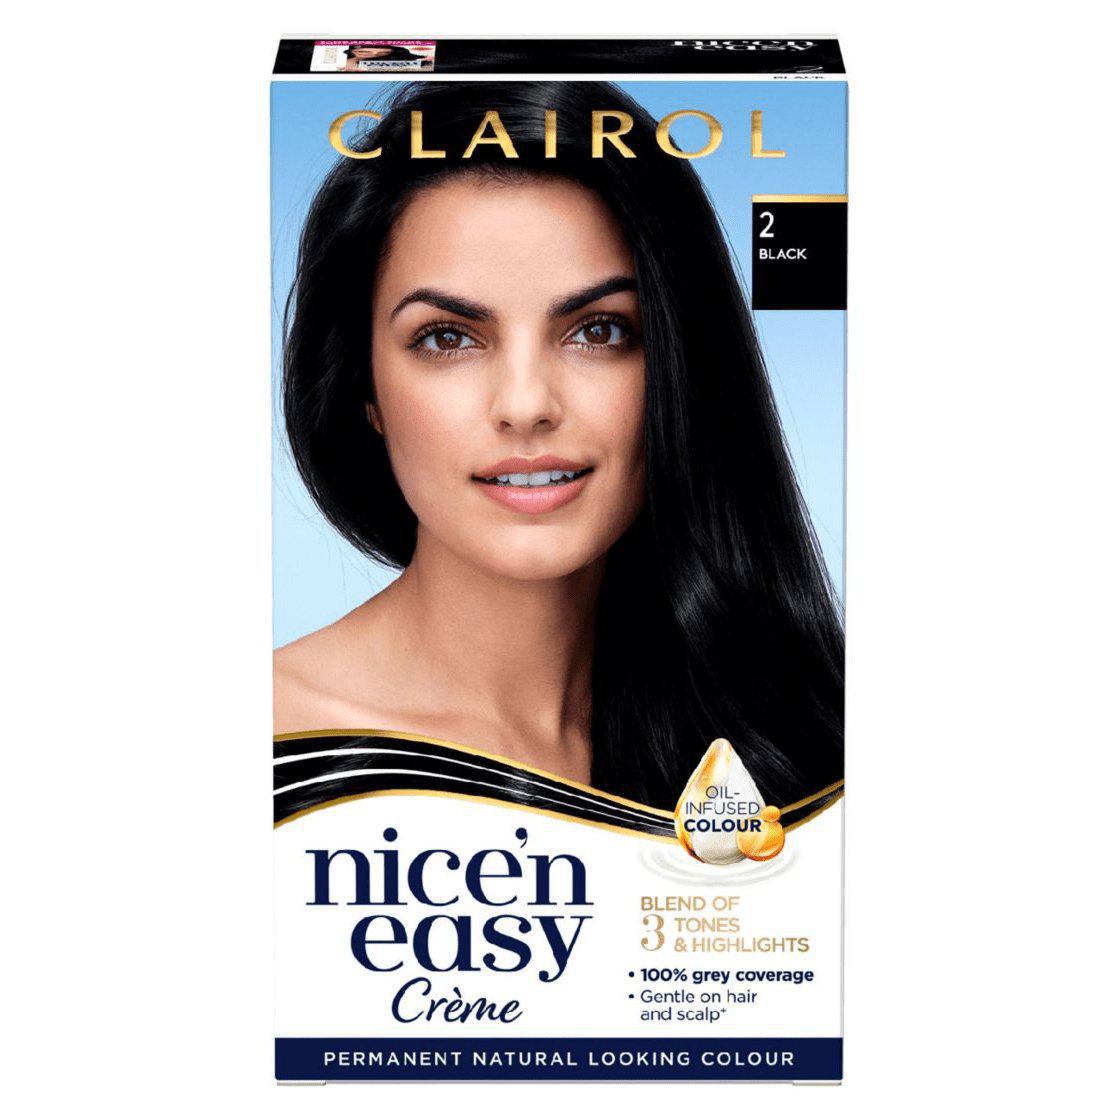 Clairol Nice N Easy Crème Natural Looking Permanent Hair Dye - 2 Black - Healthxpress.ie